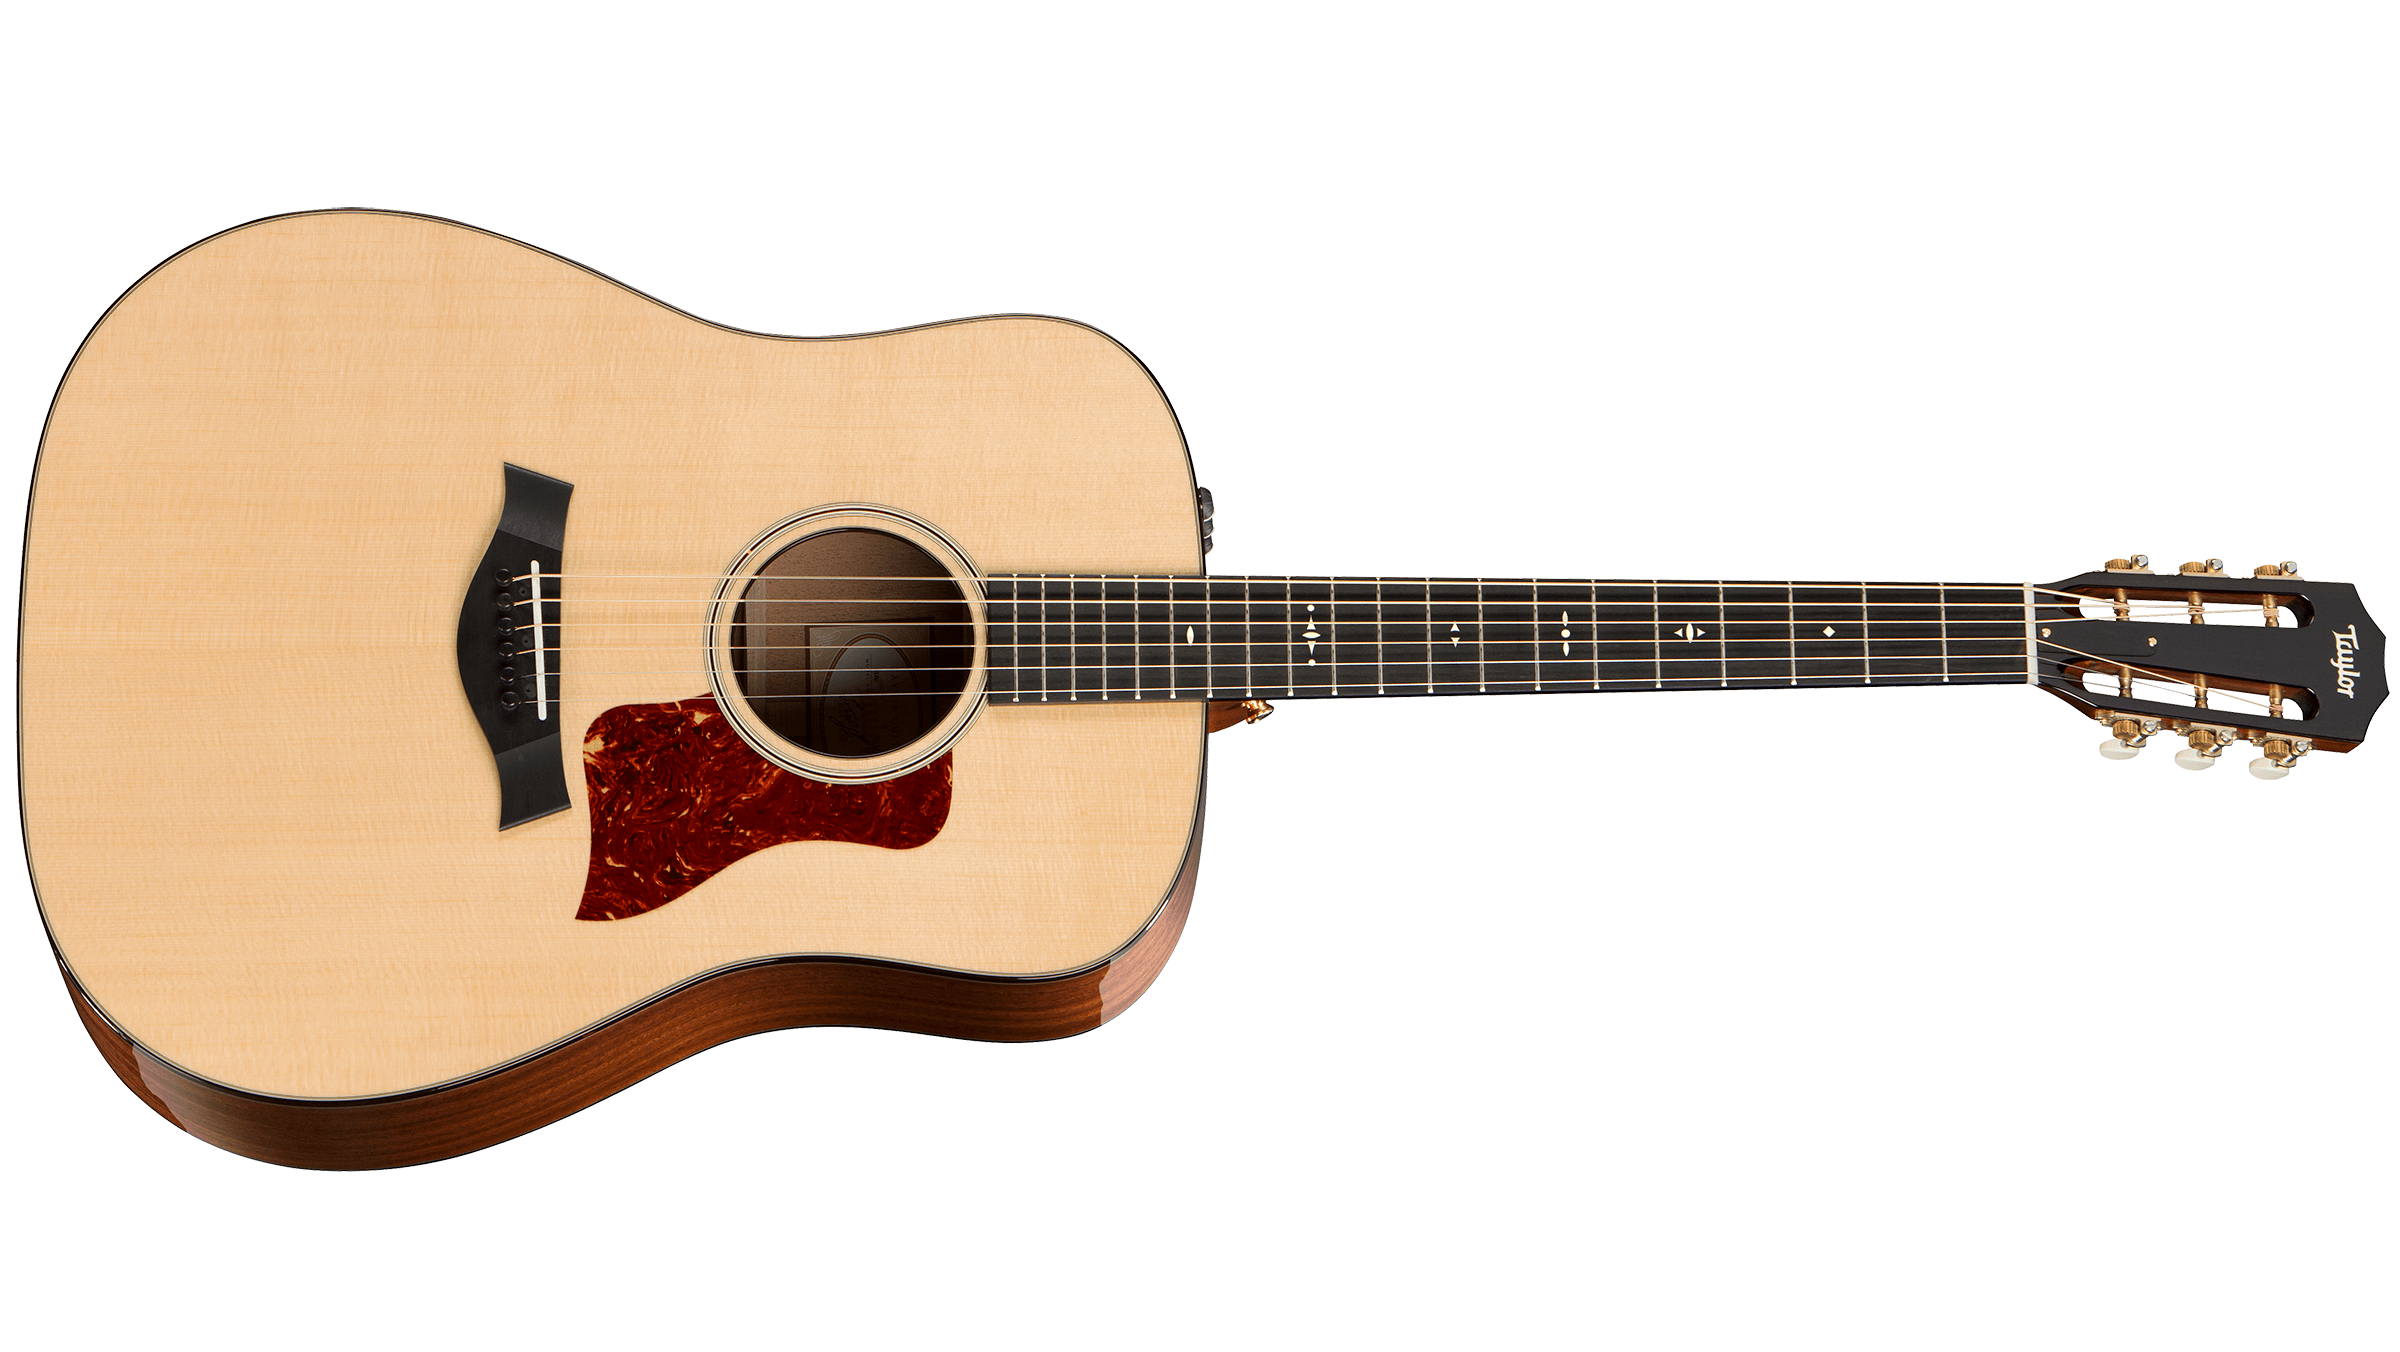 Equipment Review: Taylor 510e Acoustic Guitar